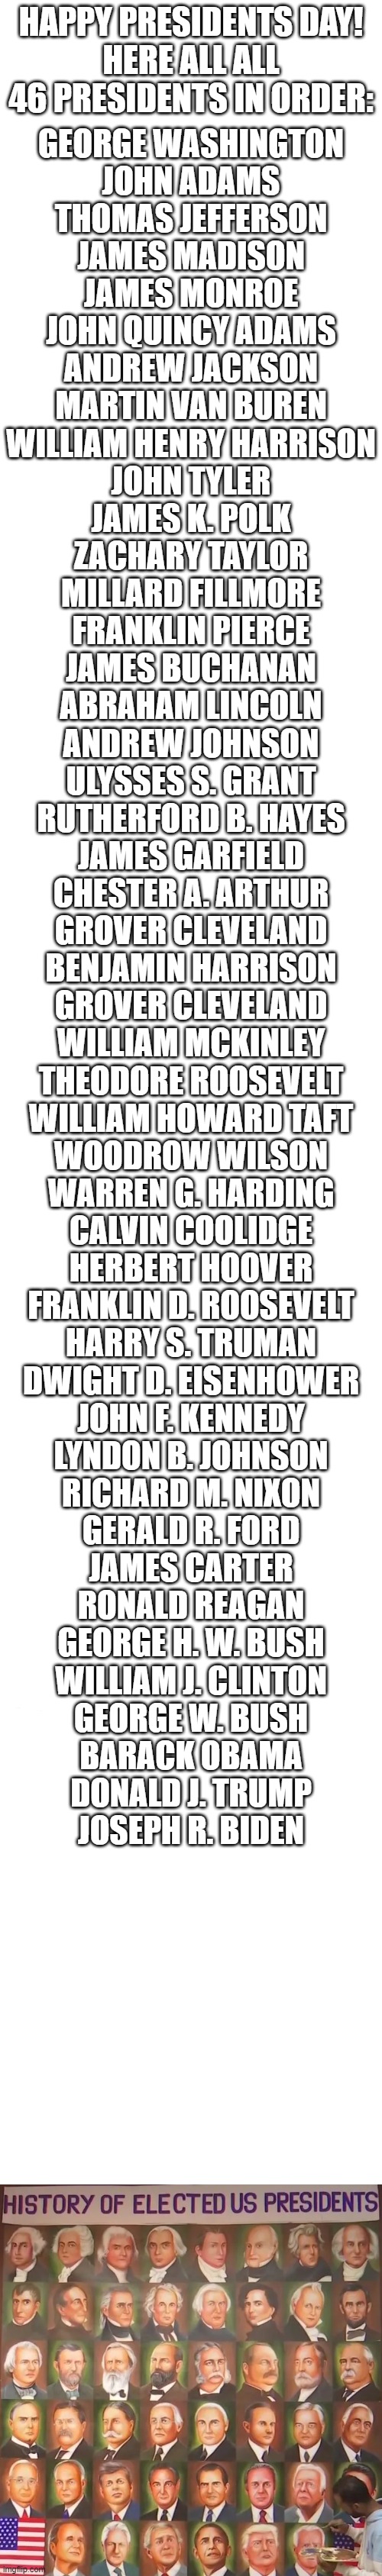 Happy Presidents Day! |  HAPPY PRESIDENTS DAY!
HERE ALL ALL 46 PRESIDENTS IN ORDER:; GEORGE WASHINGTON
JOHN ADAMS
THOMAS JEFFERSON
JAMES MADISON
JAMES MONROE
JOHN QUINCY ADAMS
ANDREW JACKSON
MARTIN VAN BUREN
WILLIAM HENRY HARRISON
JOHN TYLER
JAMES K. POLK
ZACHARY TAYLOR
MILLARD FILLMORE
FRANKLIN PIERCE
JAMES BUCHANAN
ABRAHAM LINCOLN
ANDREW JOHNSON
ULYSSES S. GRANT
RUTHERFORD B. HAYES
JAMES GARFIELD
CHESTER A. ARTHUR
GROVER CLEVELAND
BENJAMIN HARRISON
GROVER CLEVELAND
WILLIAM MCKINLEY
THEODORE ROOSEVELT
WILLIAM HOWARD TAFT
WOODROW WILSON
WARREN G. HARDING
CALVIN COOLIDGE
HERBERT HOOVER
FRANKLIN D. ROOSEVELT
HARRY S. TRUMAN
DWIGHT D. EISENHOWER
JOHN F. KENNEDY
LYNDON B. JOHNSON
RICHARD M. NIXON
GERALD R. FORD
JAMES CARTER
RONALD REAGAN
GEORGE H. W. BUSH
WILLIAM J. CLINTON
GEORGE W. BUSH
BARACK OBAMA
DONALD J. TRUMP
JOSEPH R. BIDEN | image tagged in long white template,presidents,president,presidents day,memes,why are you reading this | made w/ Imgflip meme maker